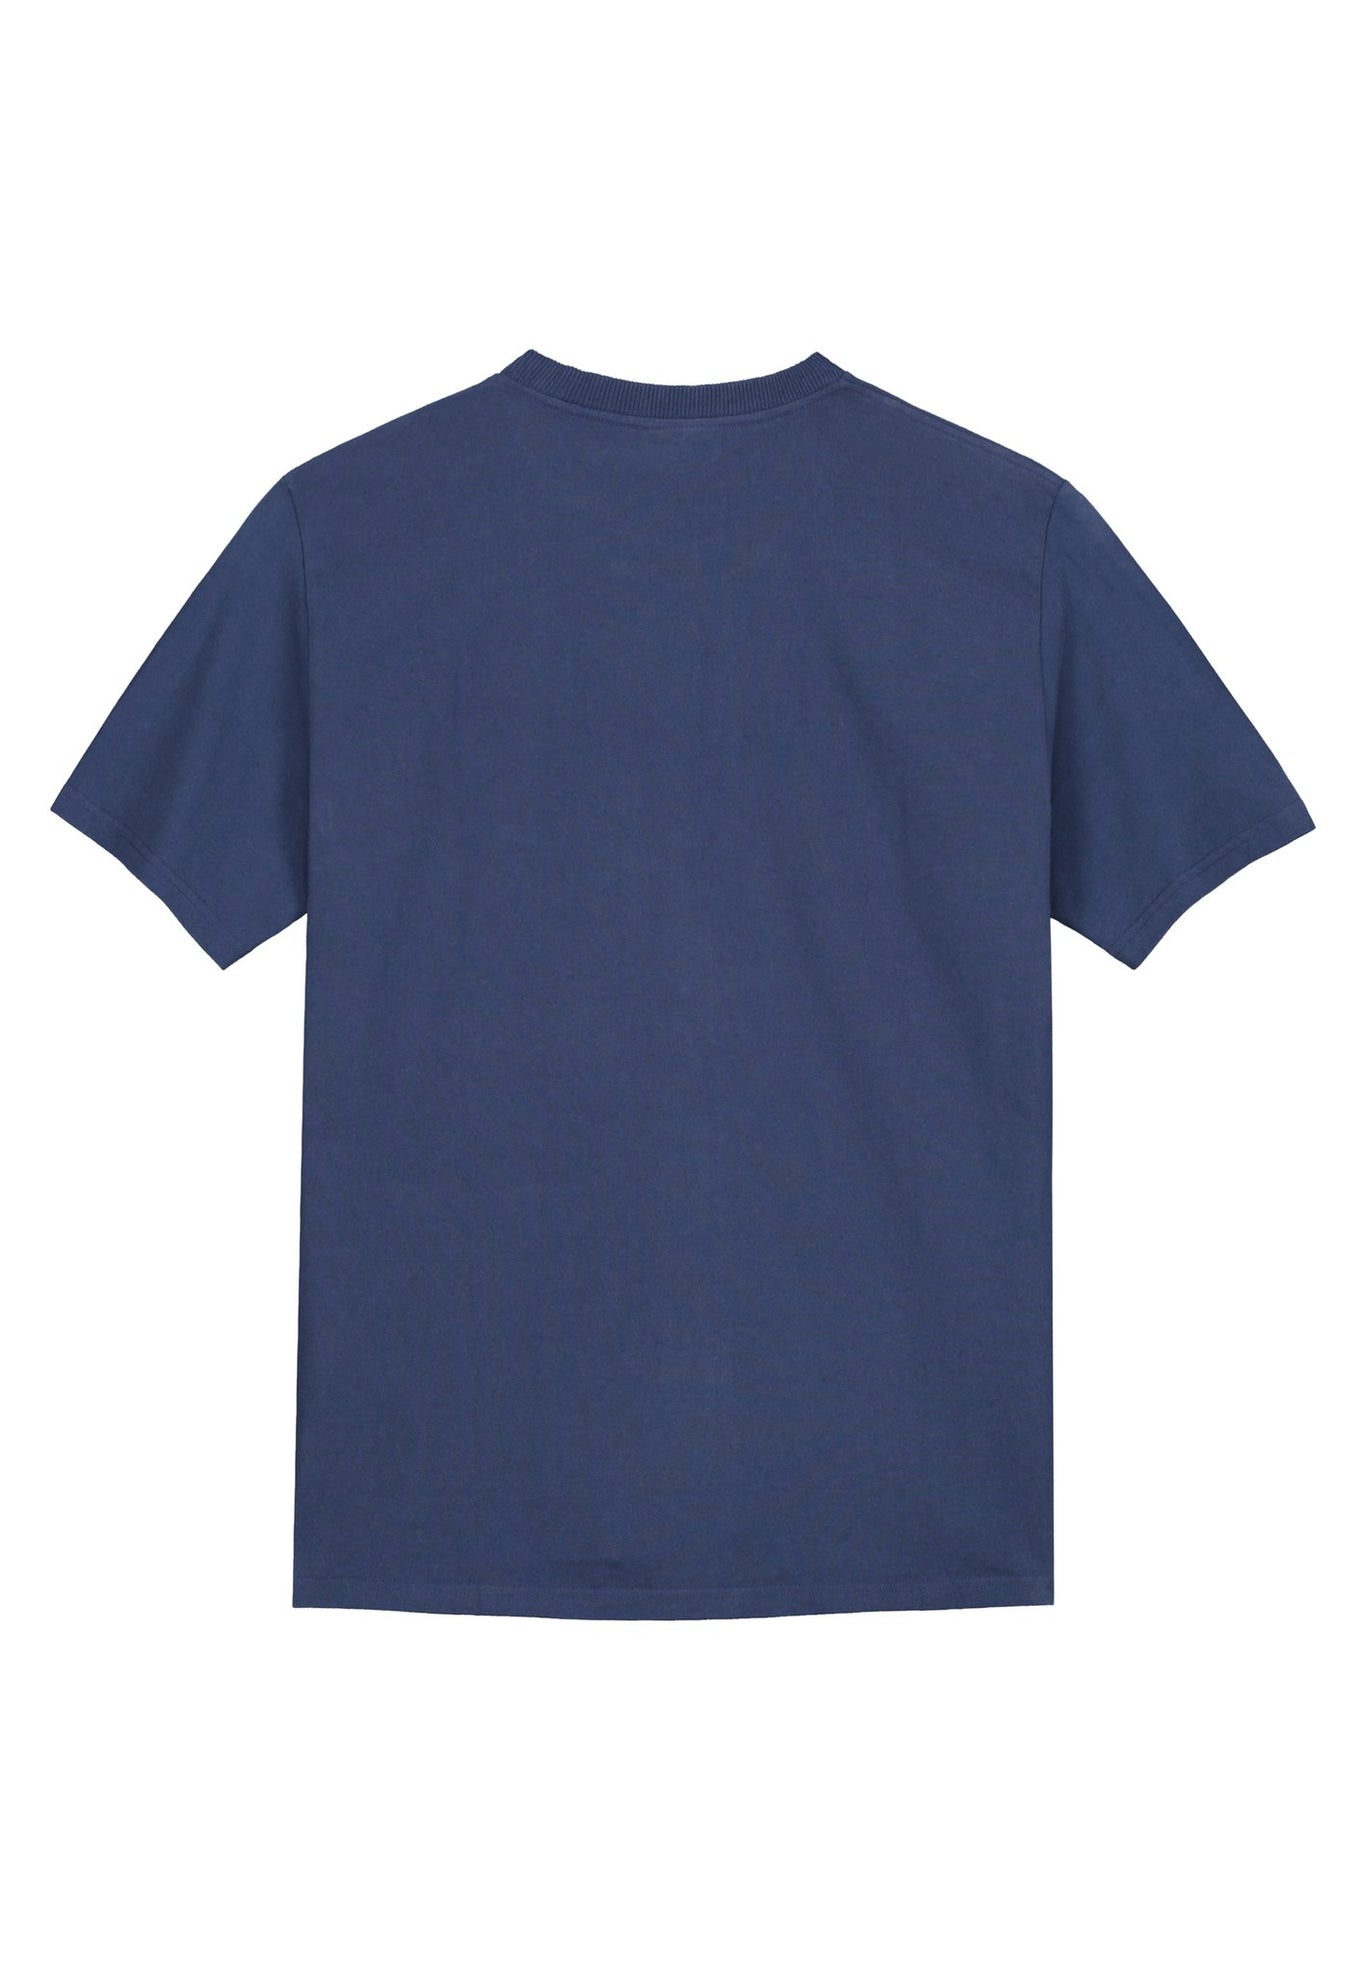 Full Circle Navy T-Shirt